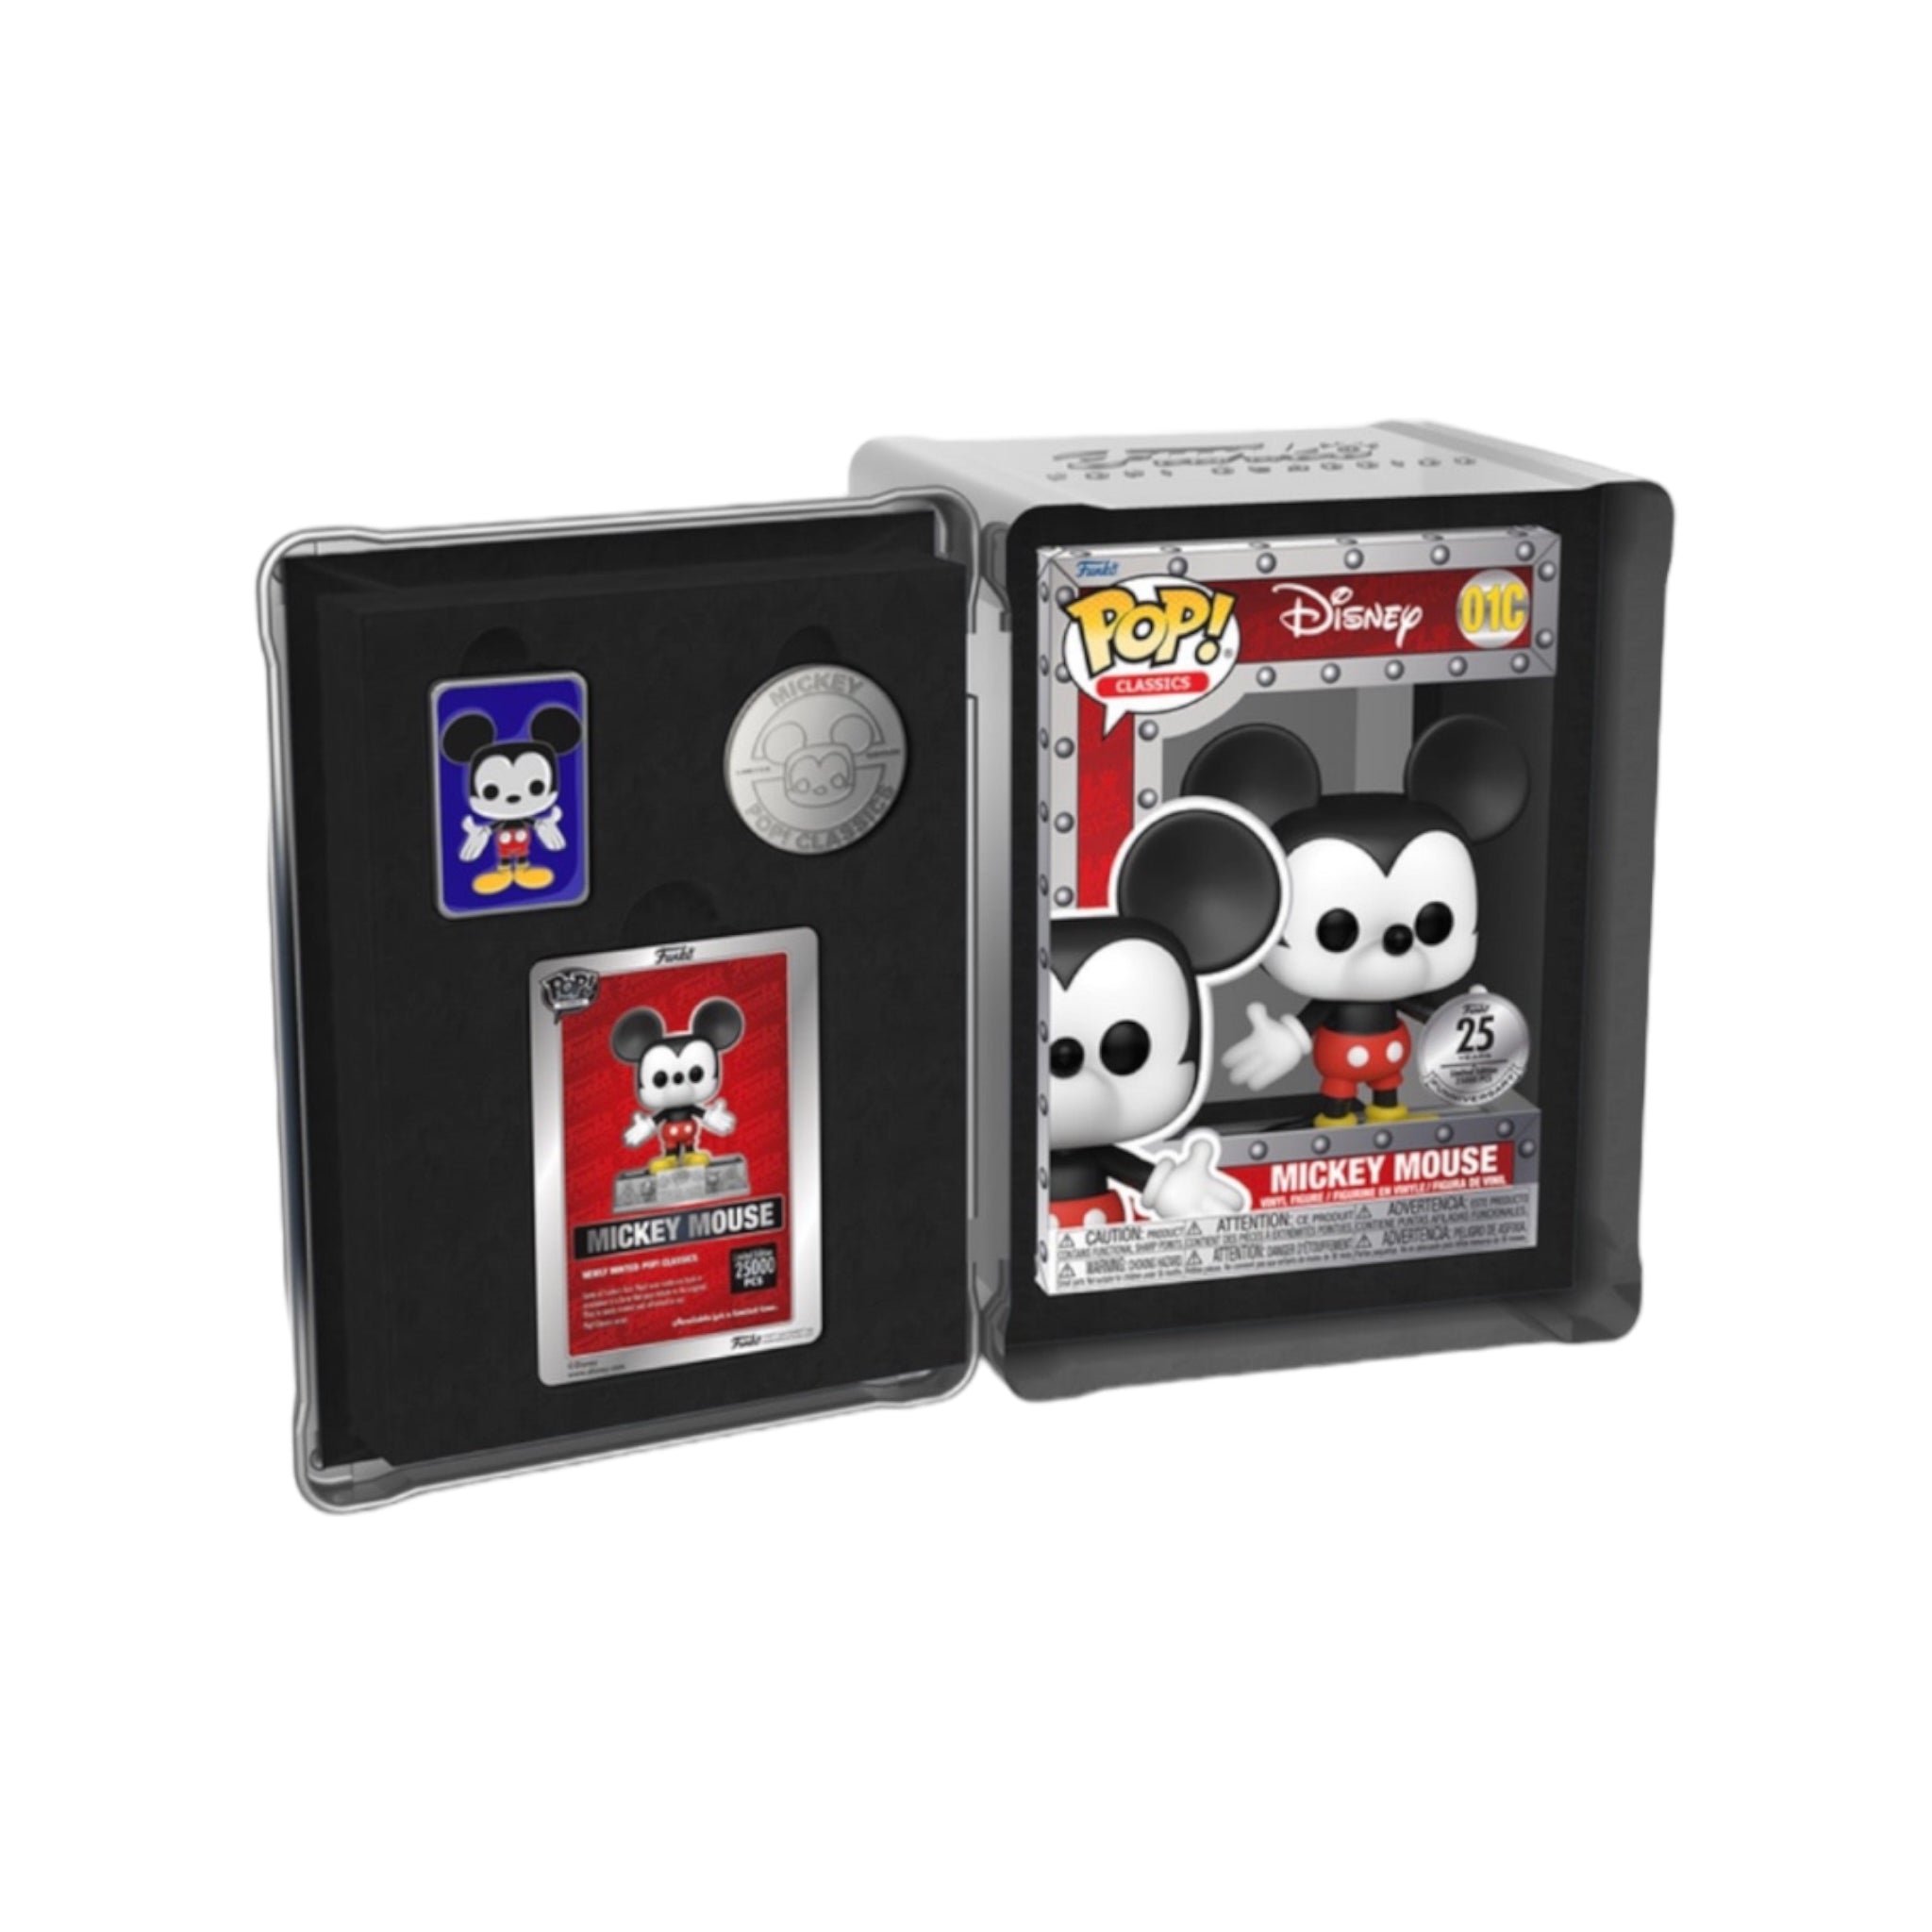 Mickey Mouse 25th Anniversary Funko Pop Classics! - Disney - Funko Shop Exclusive LE25000 Pcs - Sealed